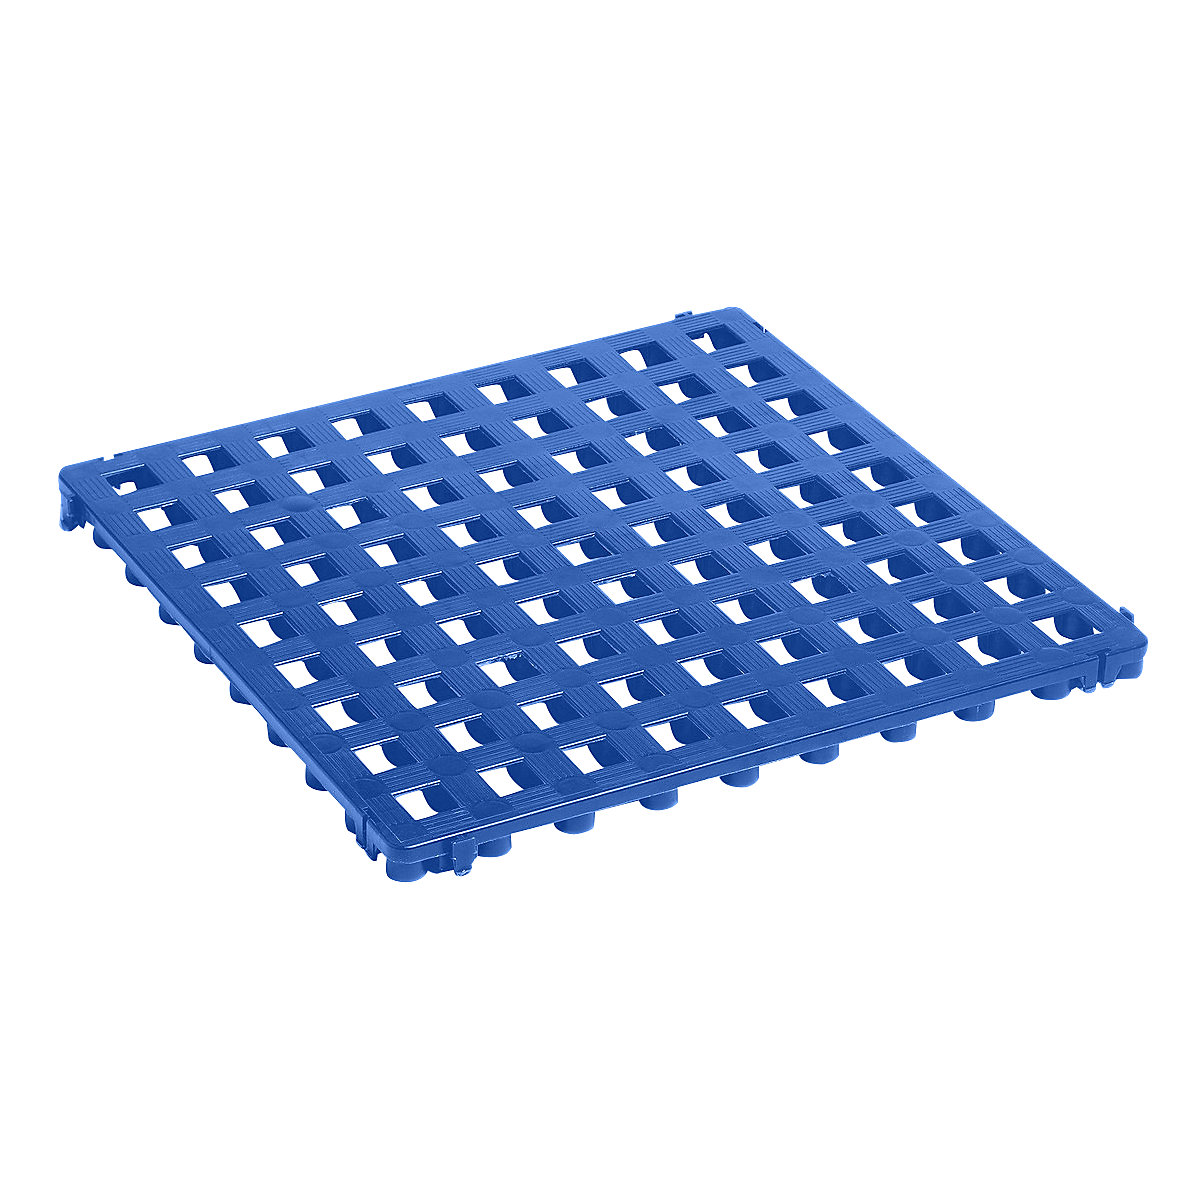 Kunststoff-Bodenrost, Polyethylen, 500 x 500 mm, Standard, VE 20 Stk, blau-6